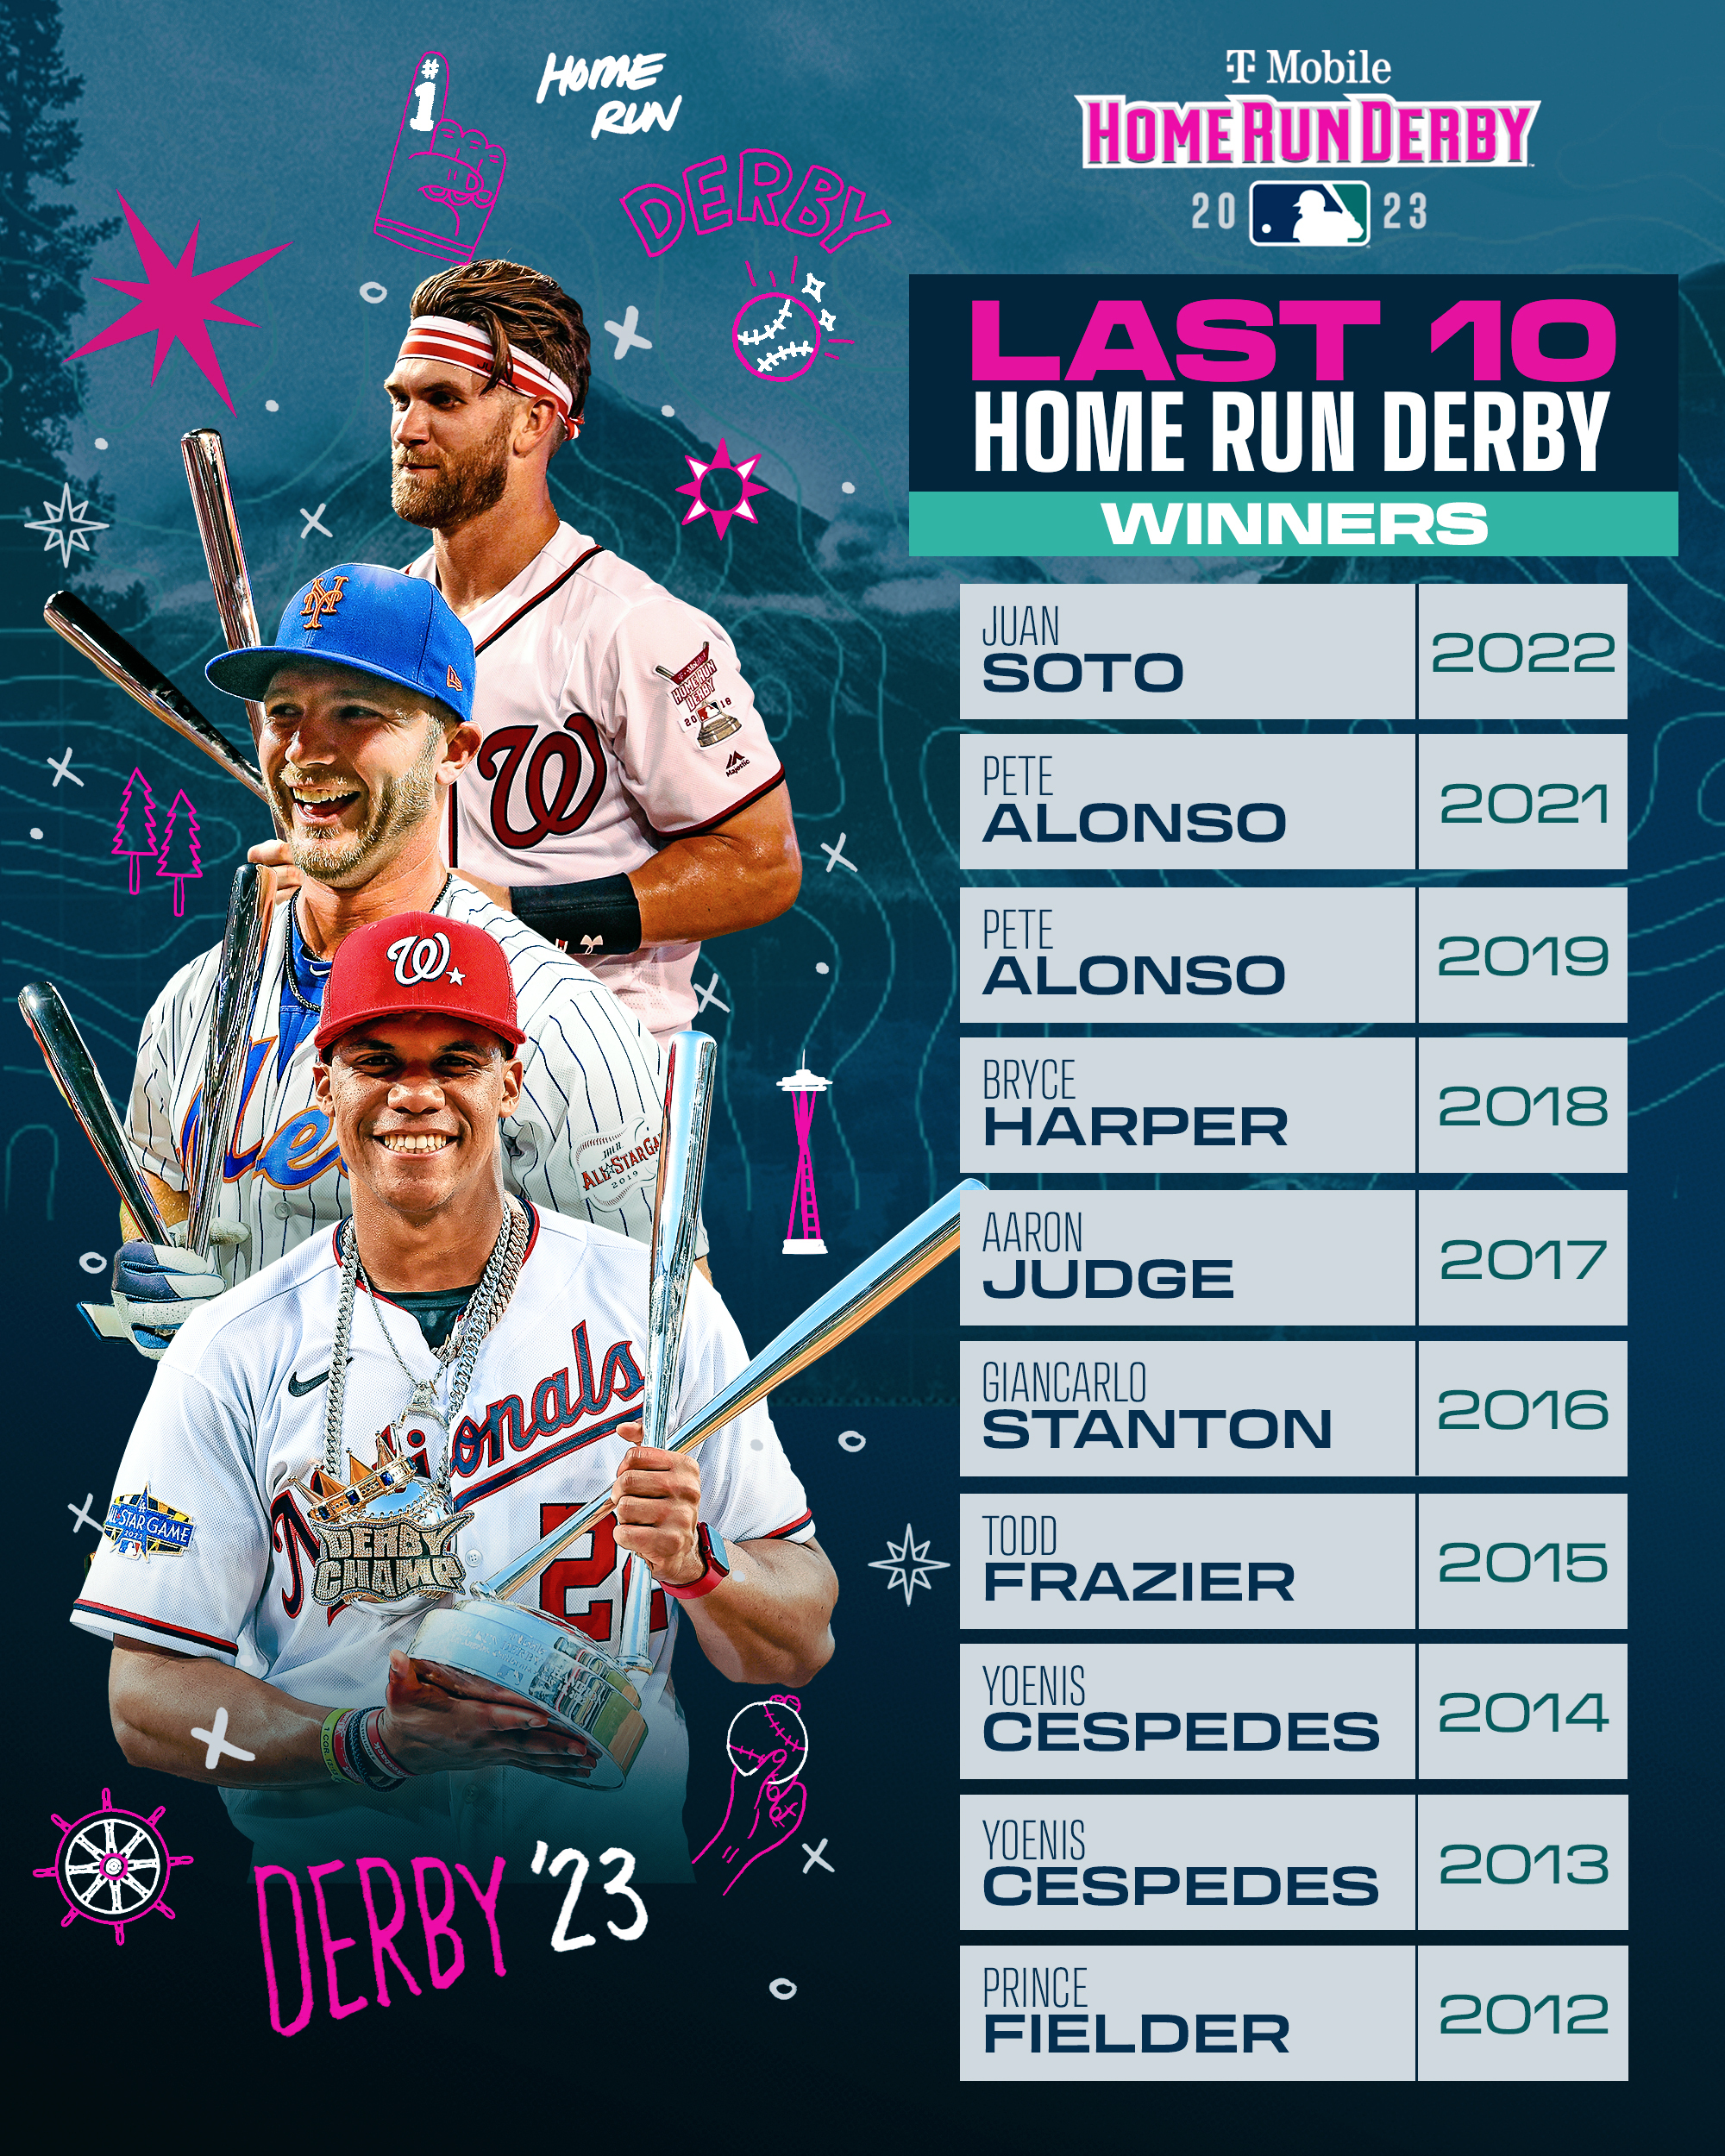 Aaron Judge wins MLB's 2017 Home Run Derby 